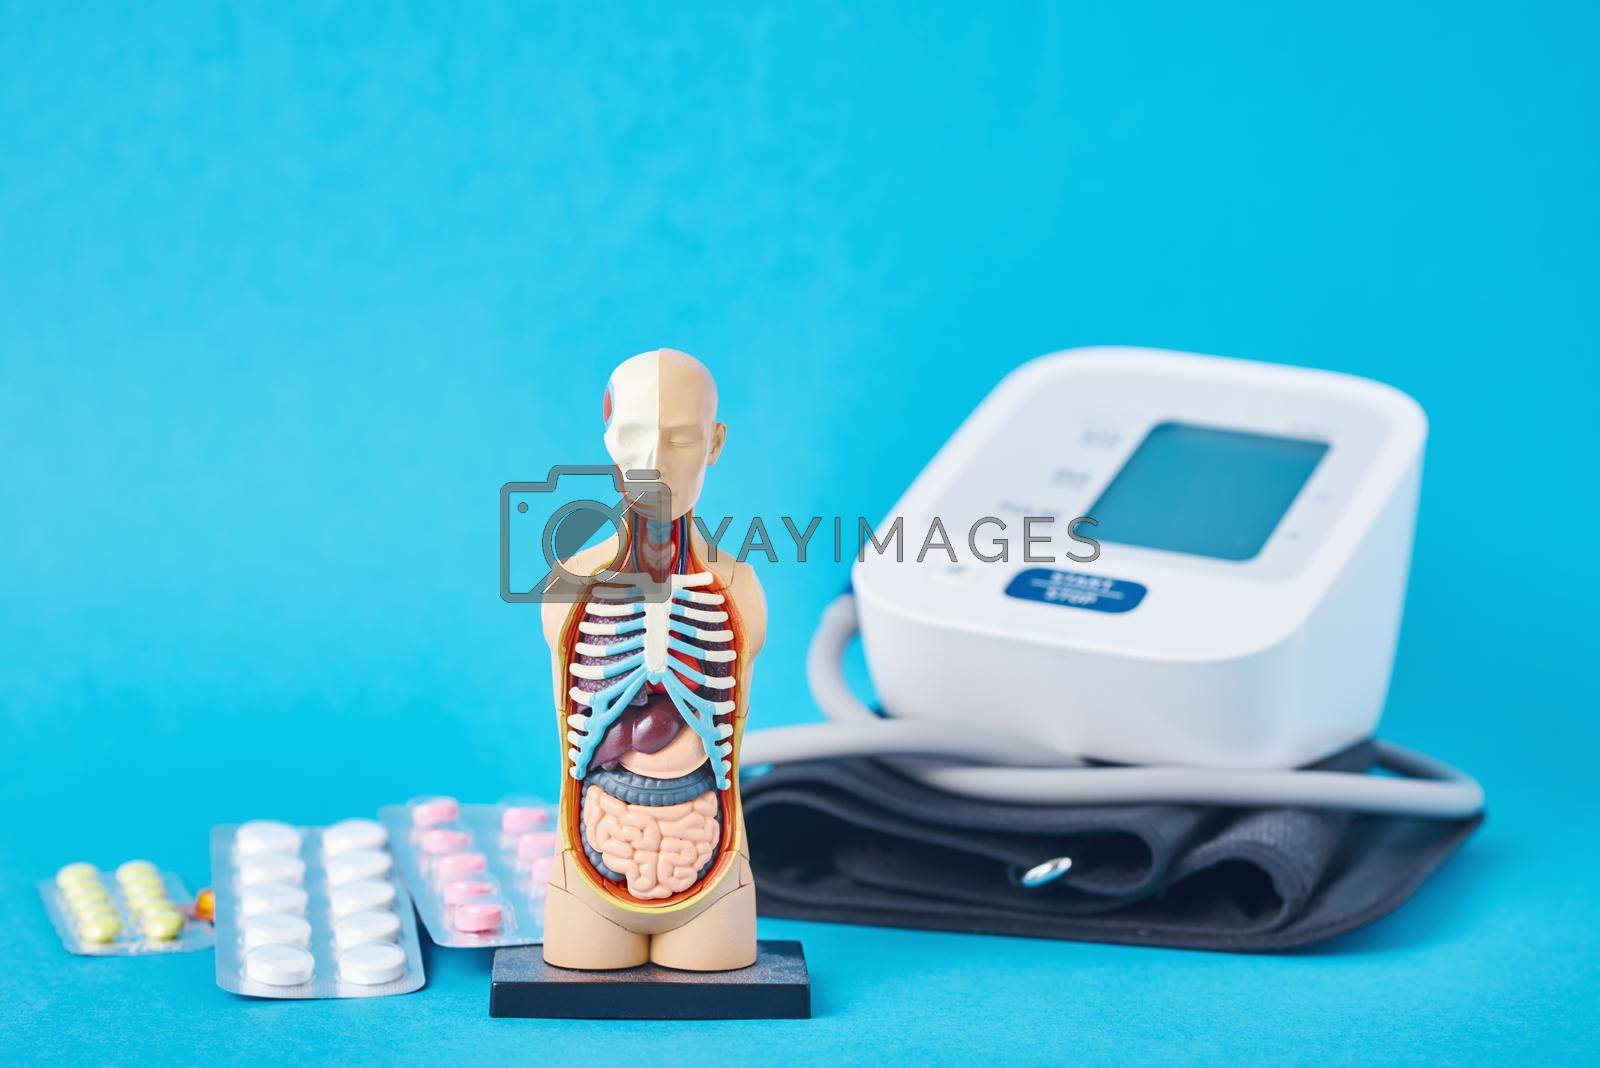 Digital blood pressure monitor, anatomical dummy man mannequin and medical pills on blue background. Healthcare and medicine concept